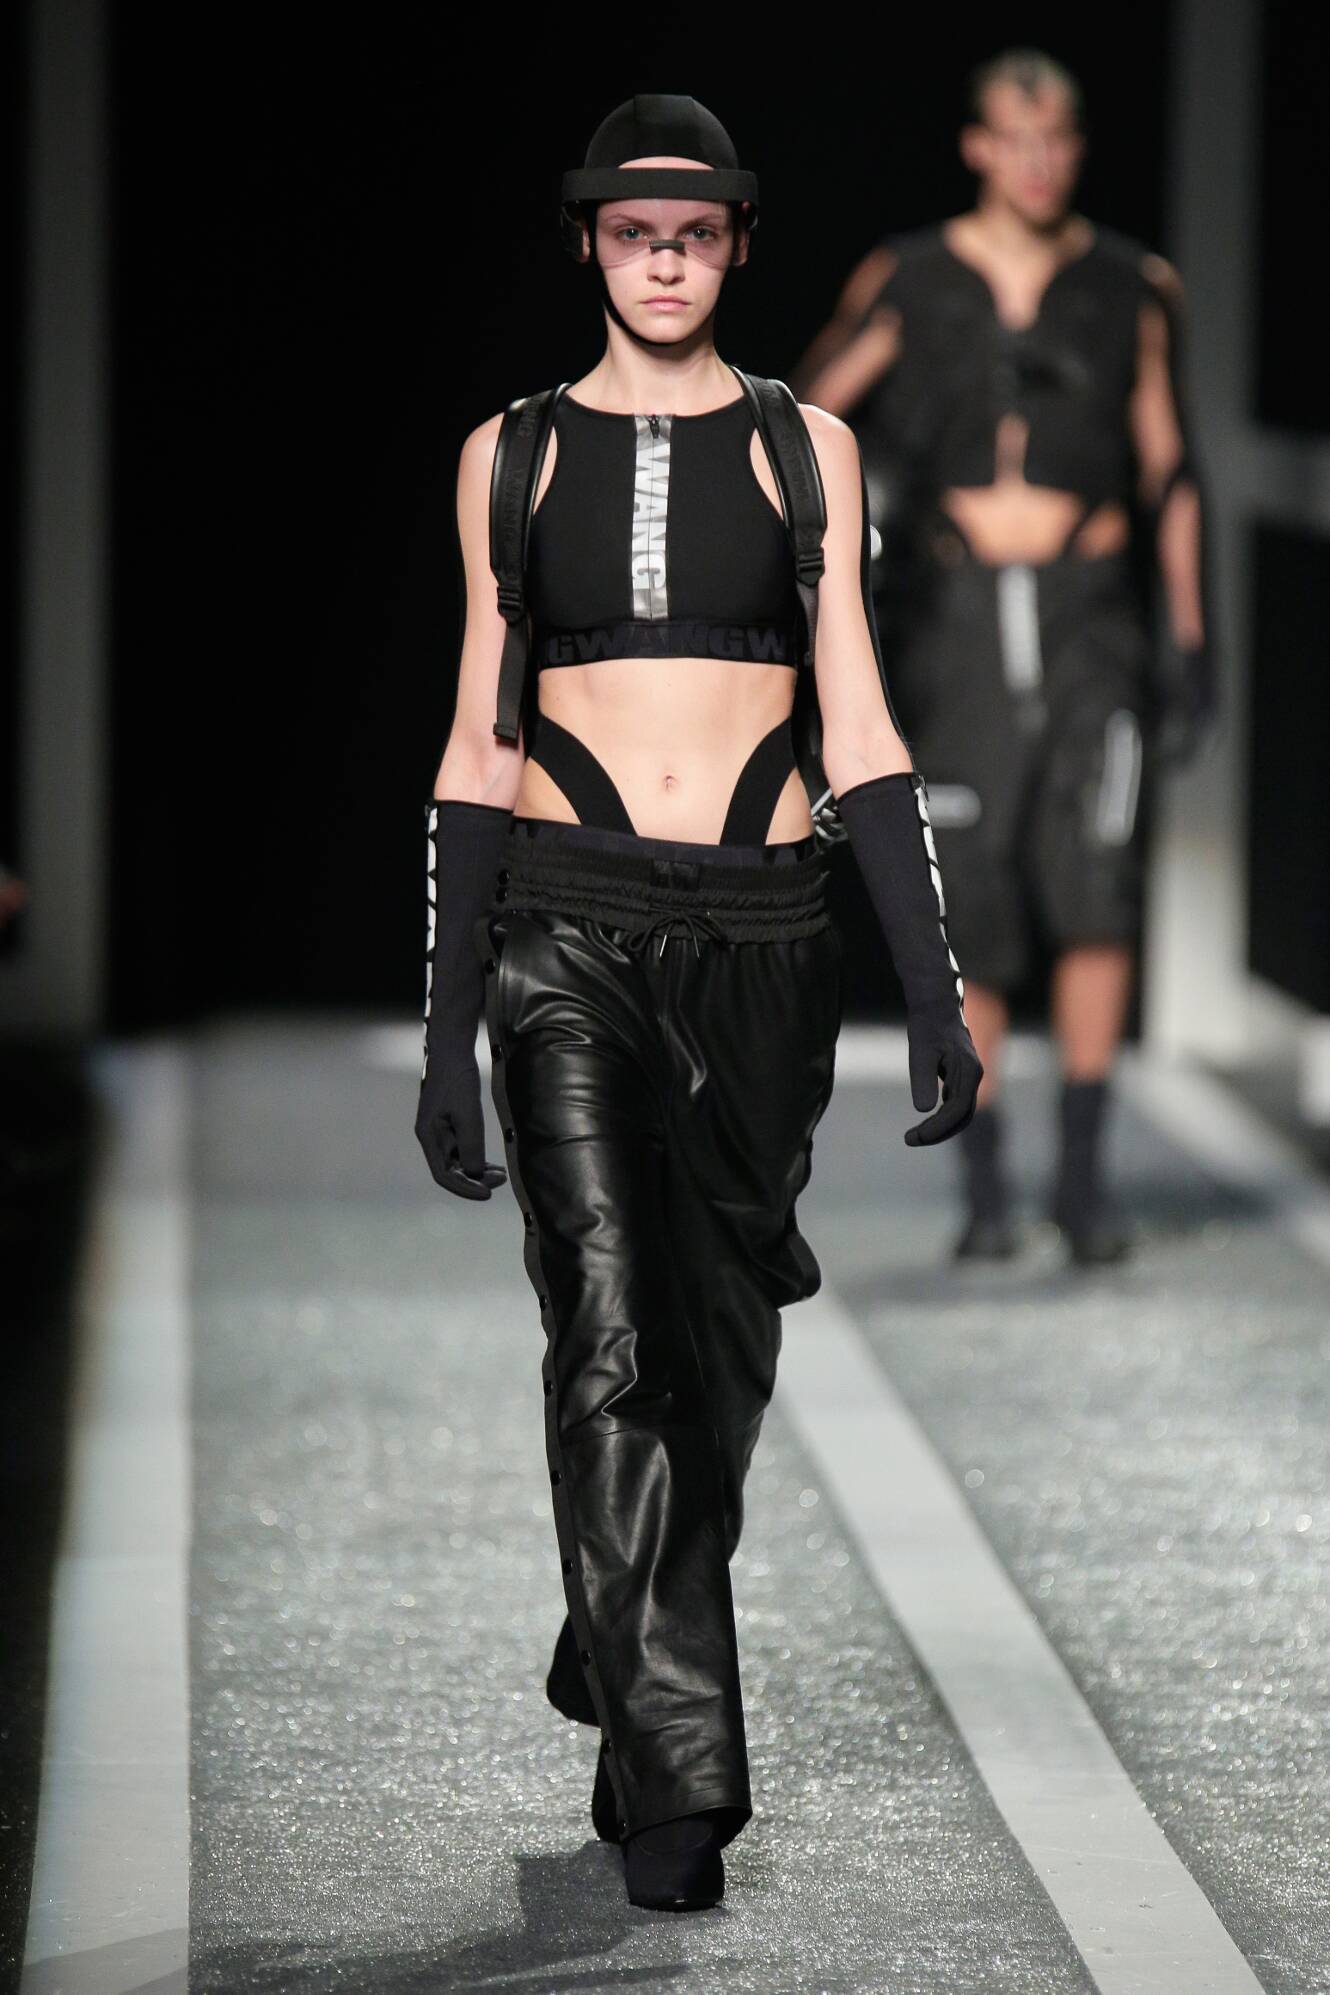 Catwalk Alexander Wang for H&M Woman Fashion Show 2015